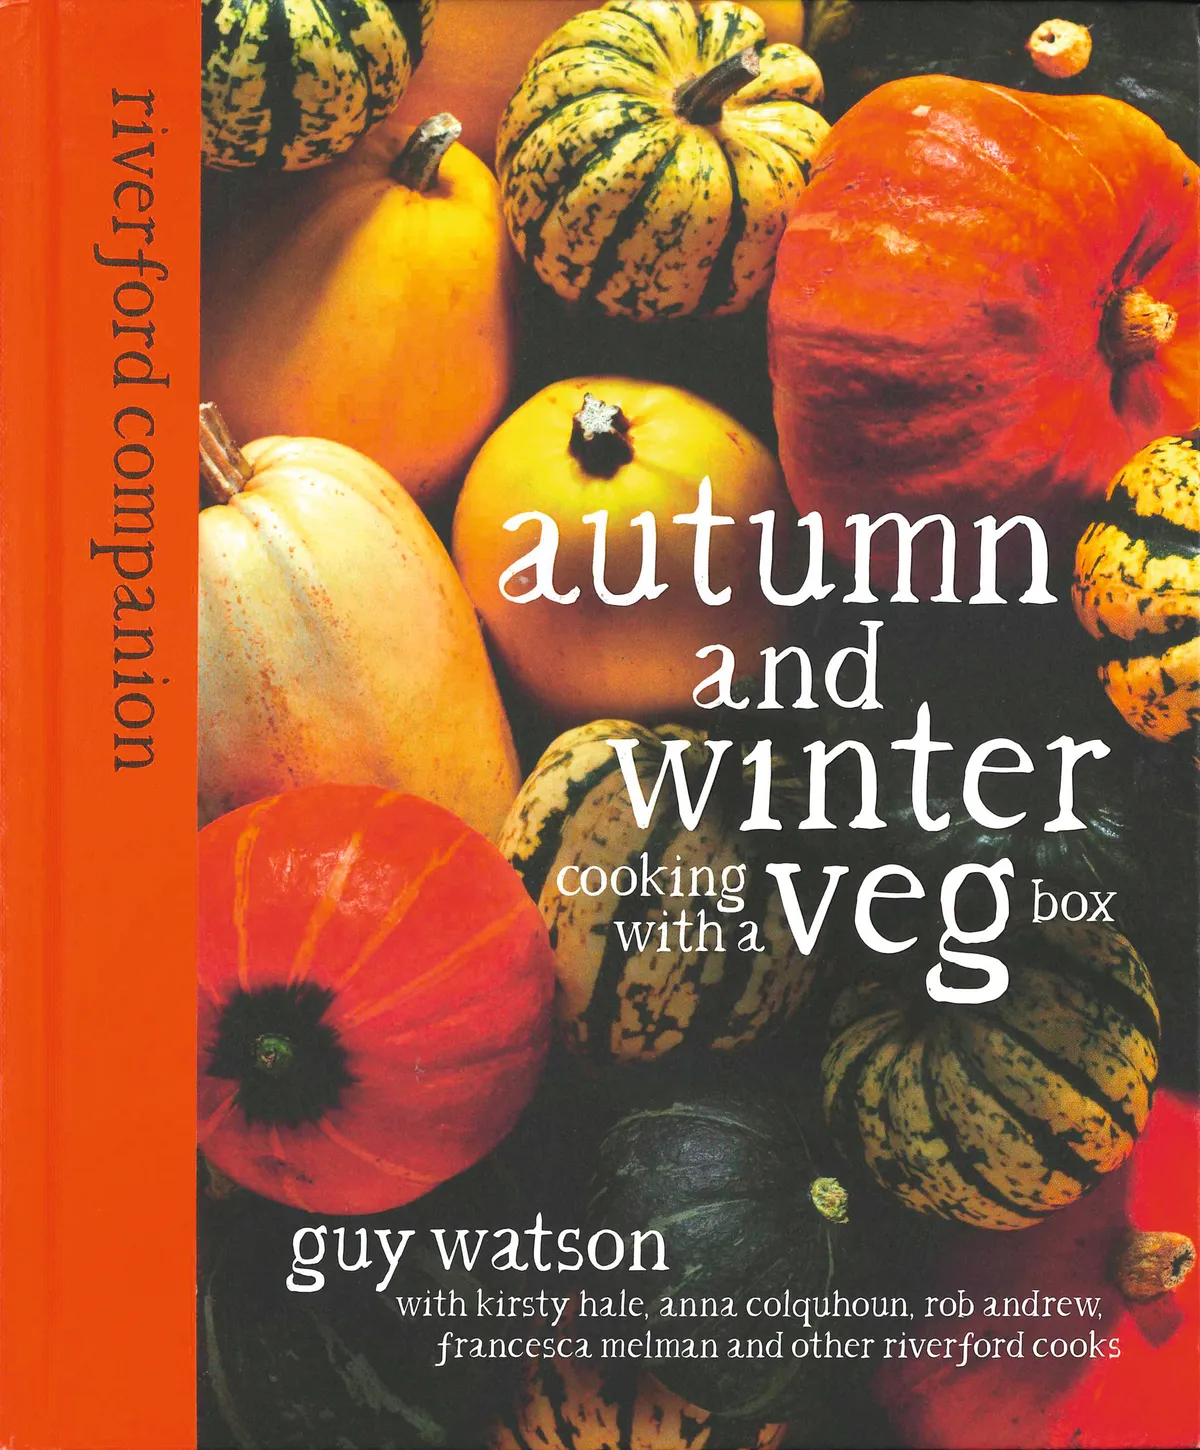 Riverford's cookbook: Autumn and Winter Veg